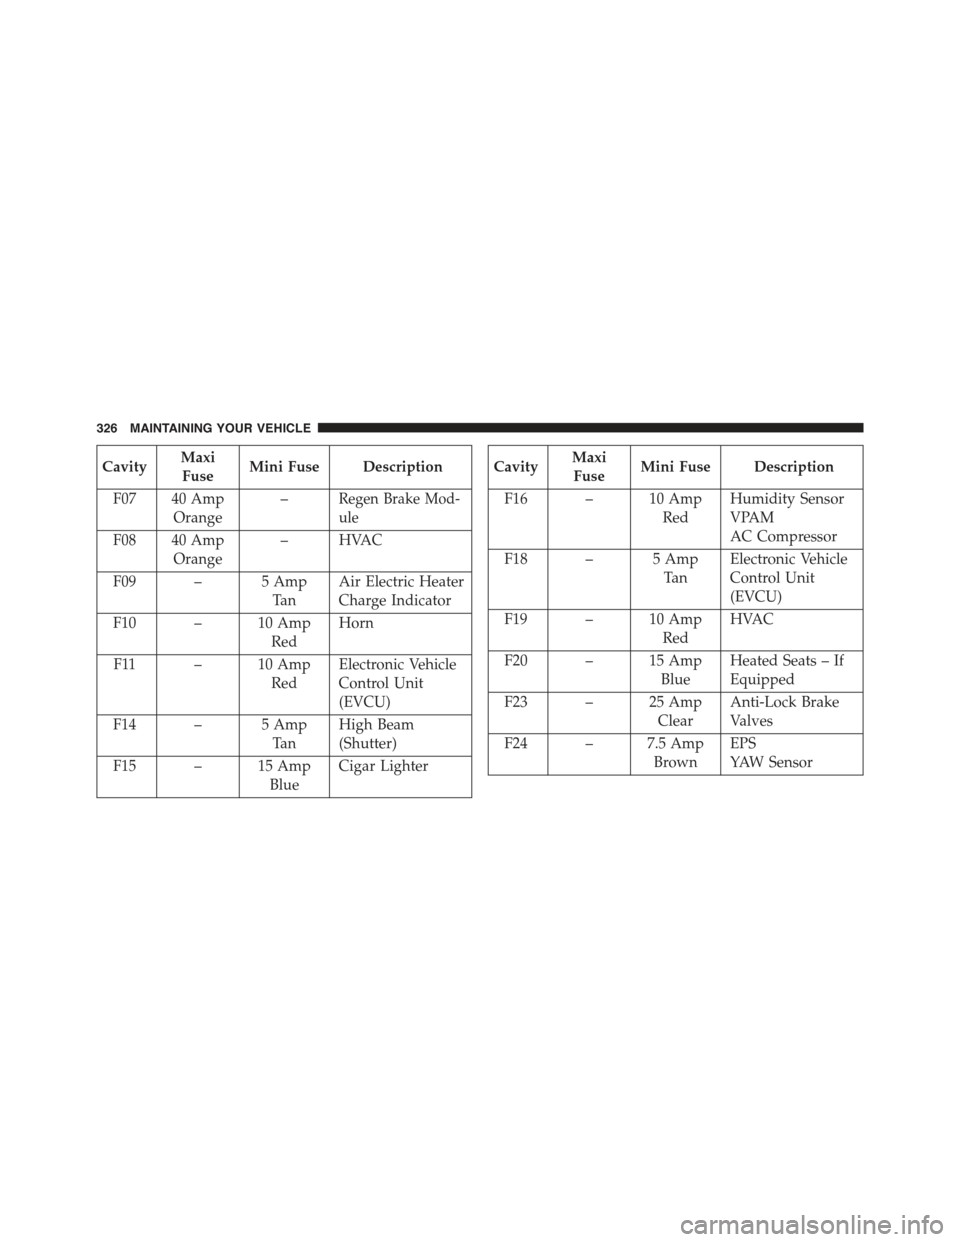 FIAT 500E 2015 2.G Owners Manual CavityMaxi
FuseMini Fuse Description
F07 40 Amp
Orange
–Regen Brake Mod-
ule
F08 40 Amp
Orange
–HVAC
F09 – 5 Amp
Ta n
Air Electric Heater
Charge Indicator
F10 – 10 Amp
Red
Horn
F11 – 10 Amp
